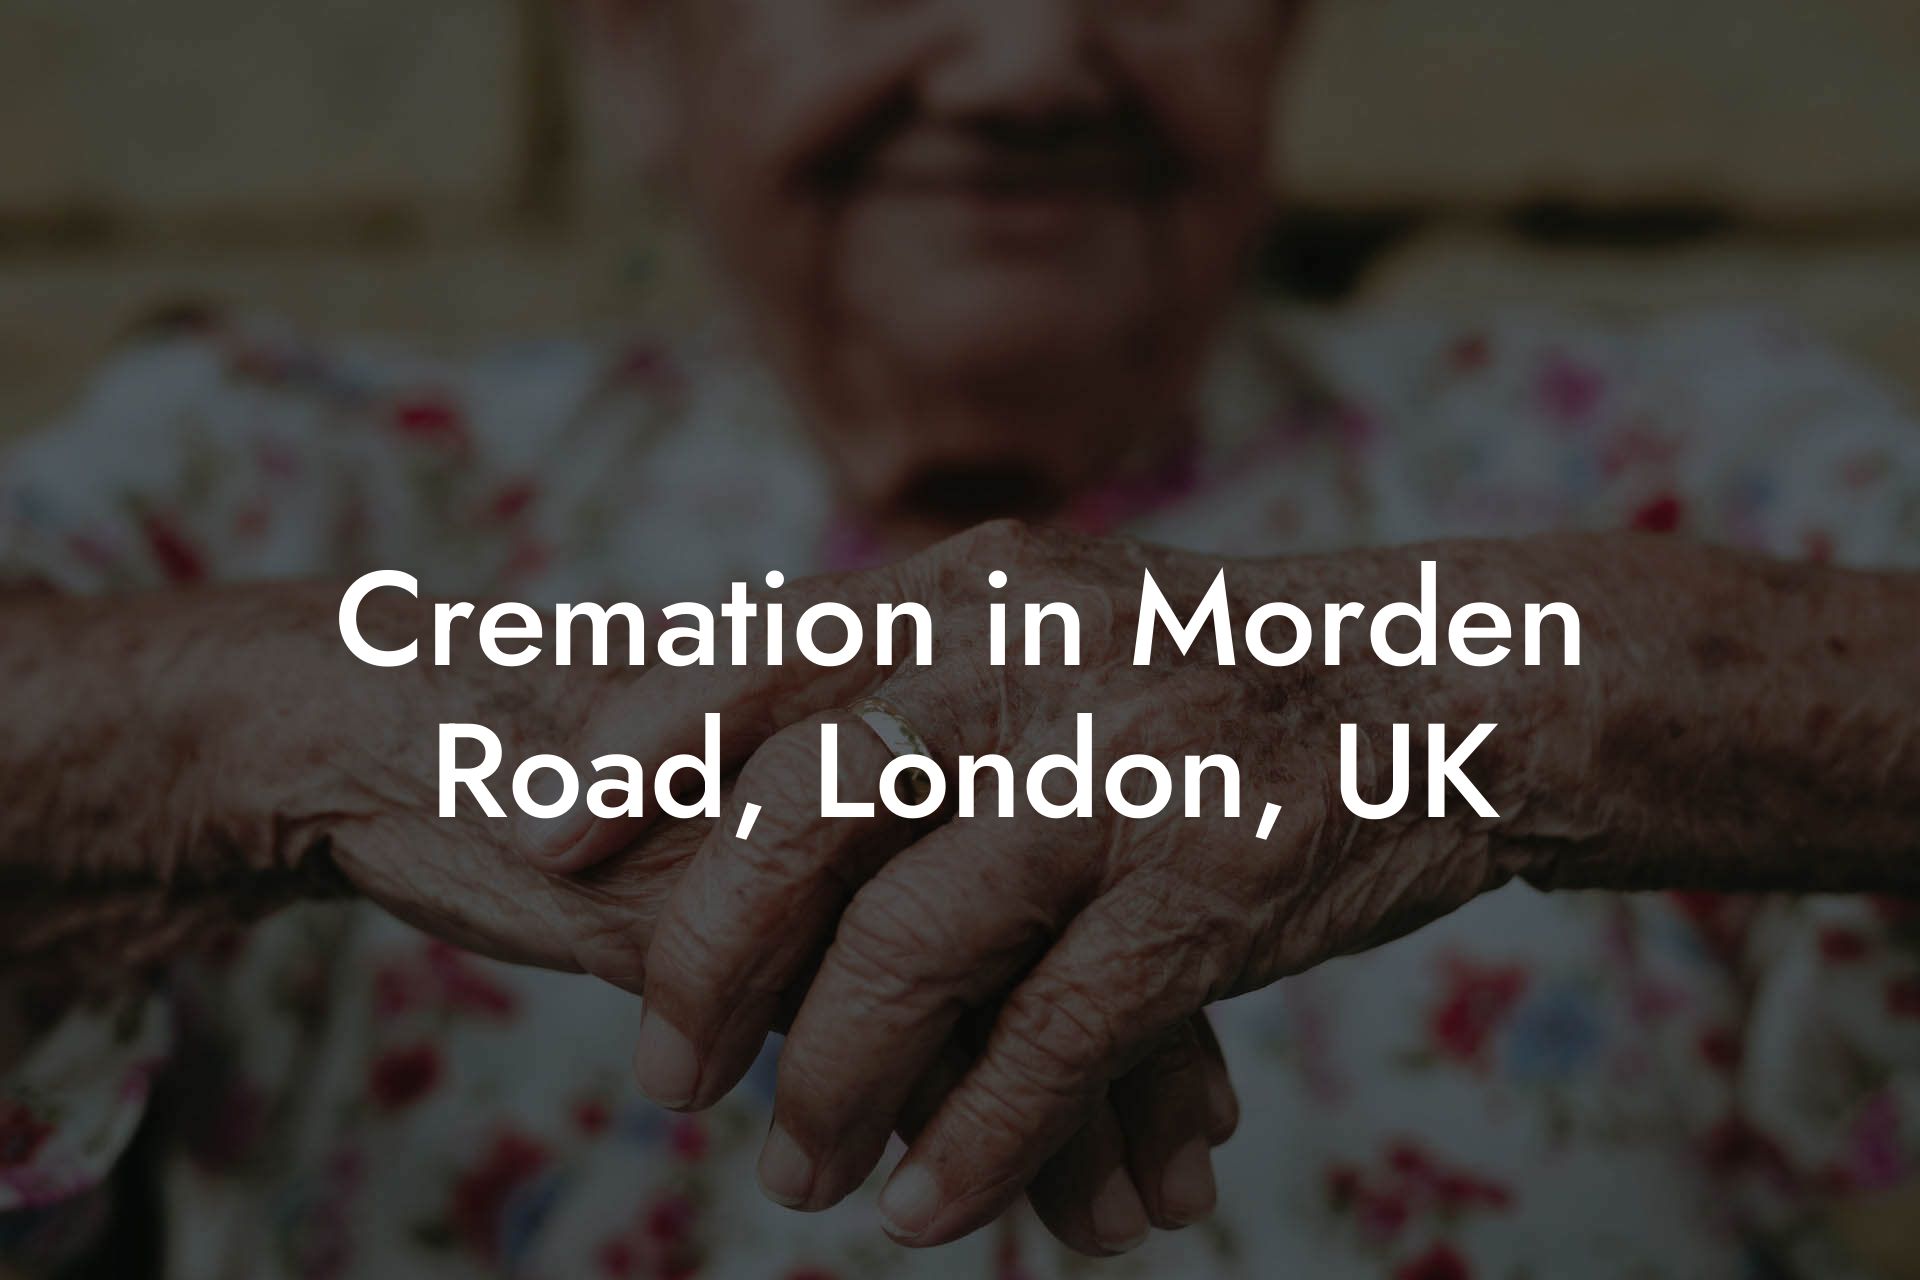 Cremation in Morden Road, London, UK